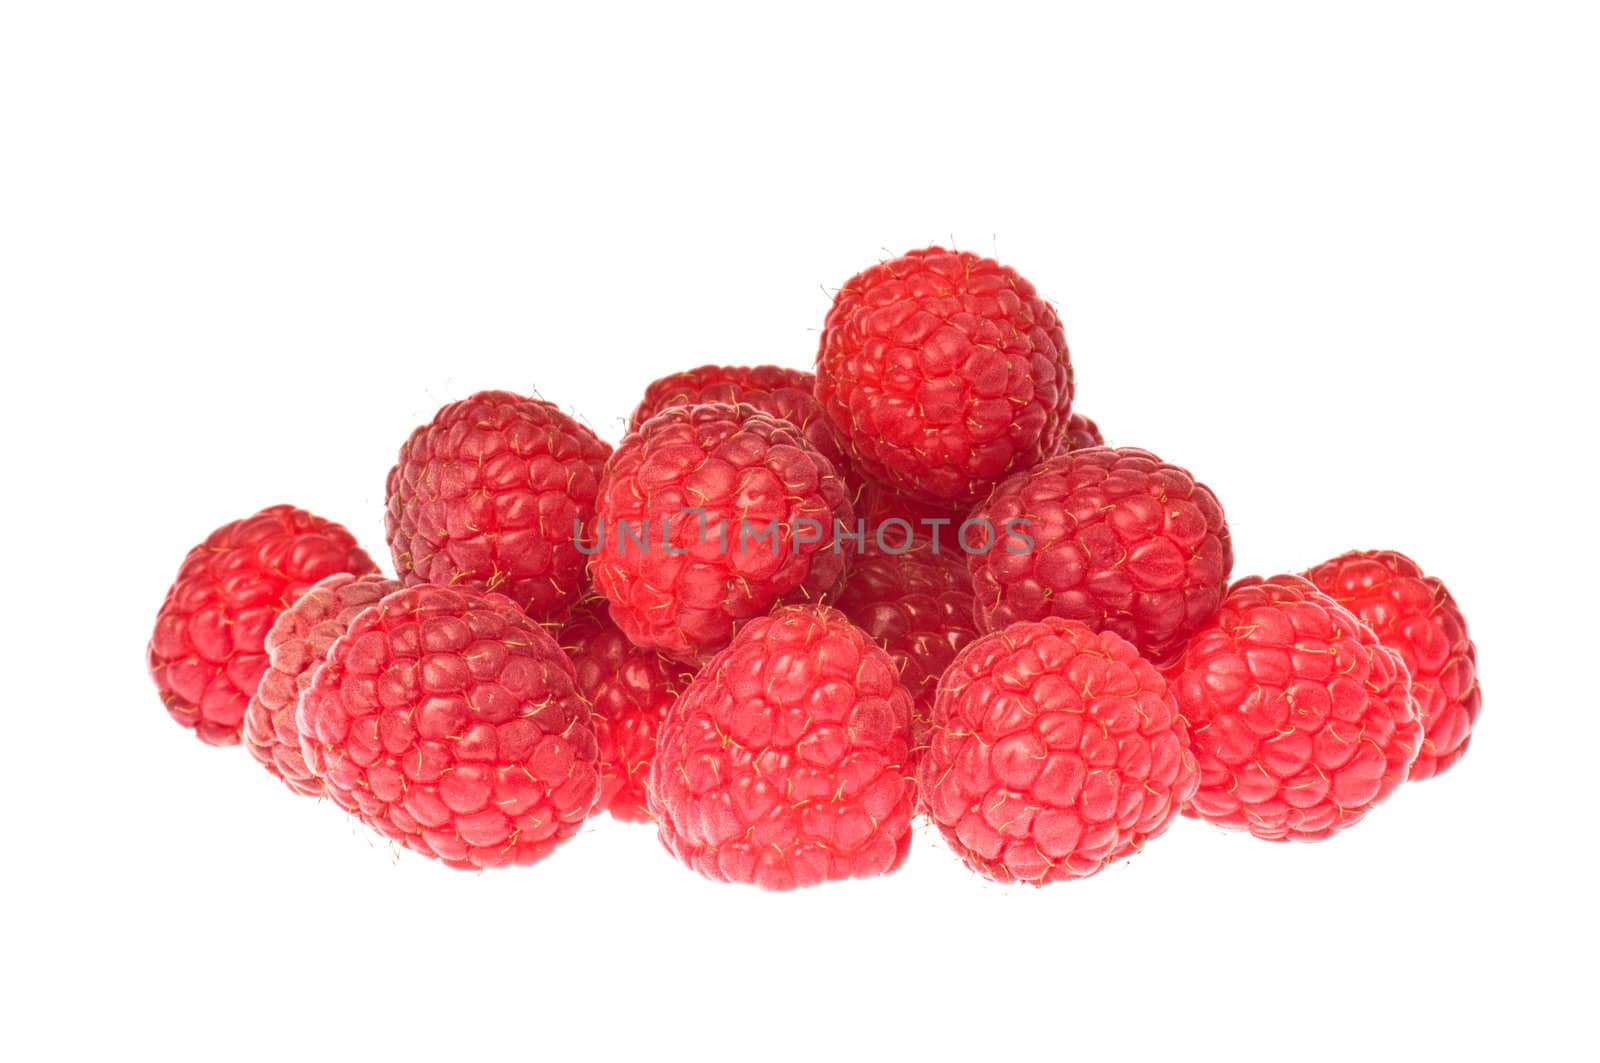 Many raspberries over white close up studio shot